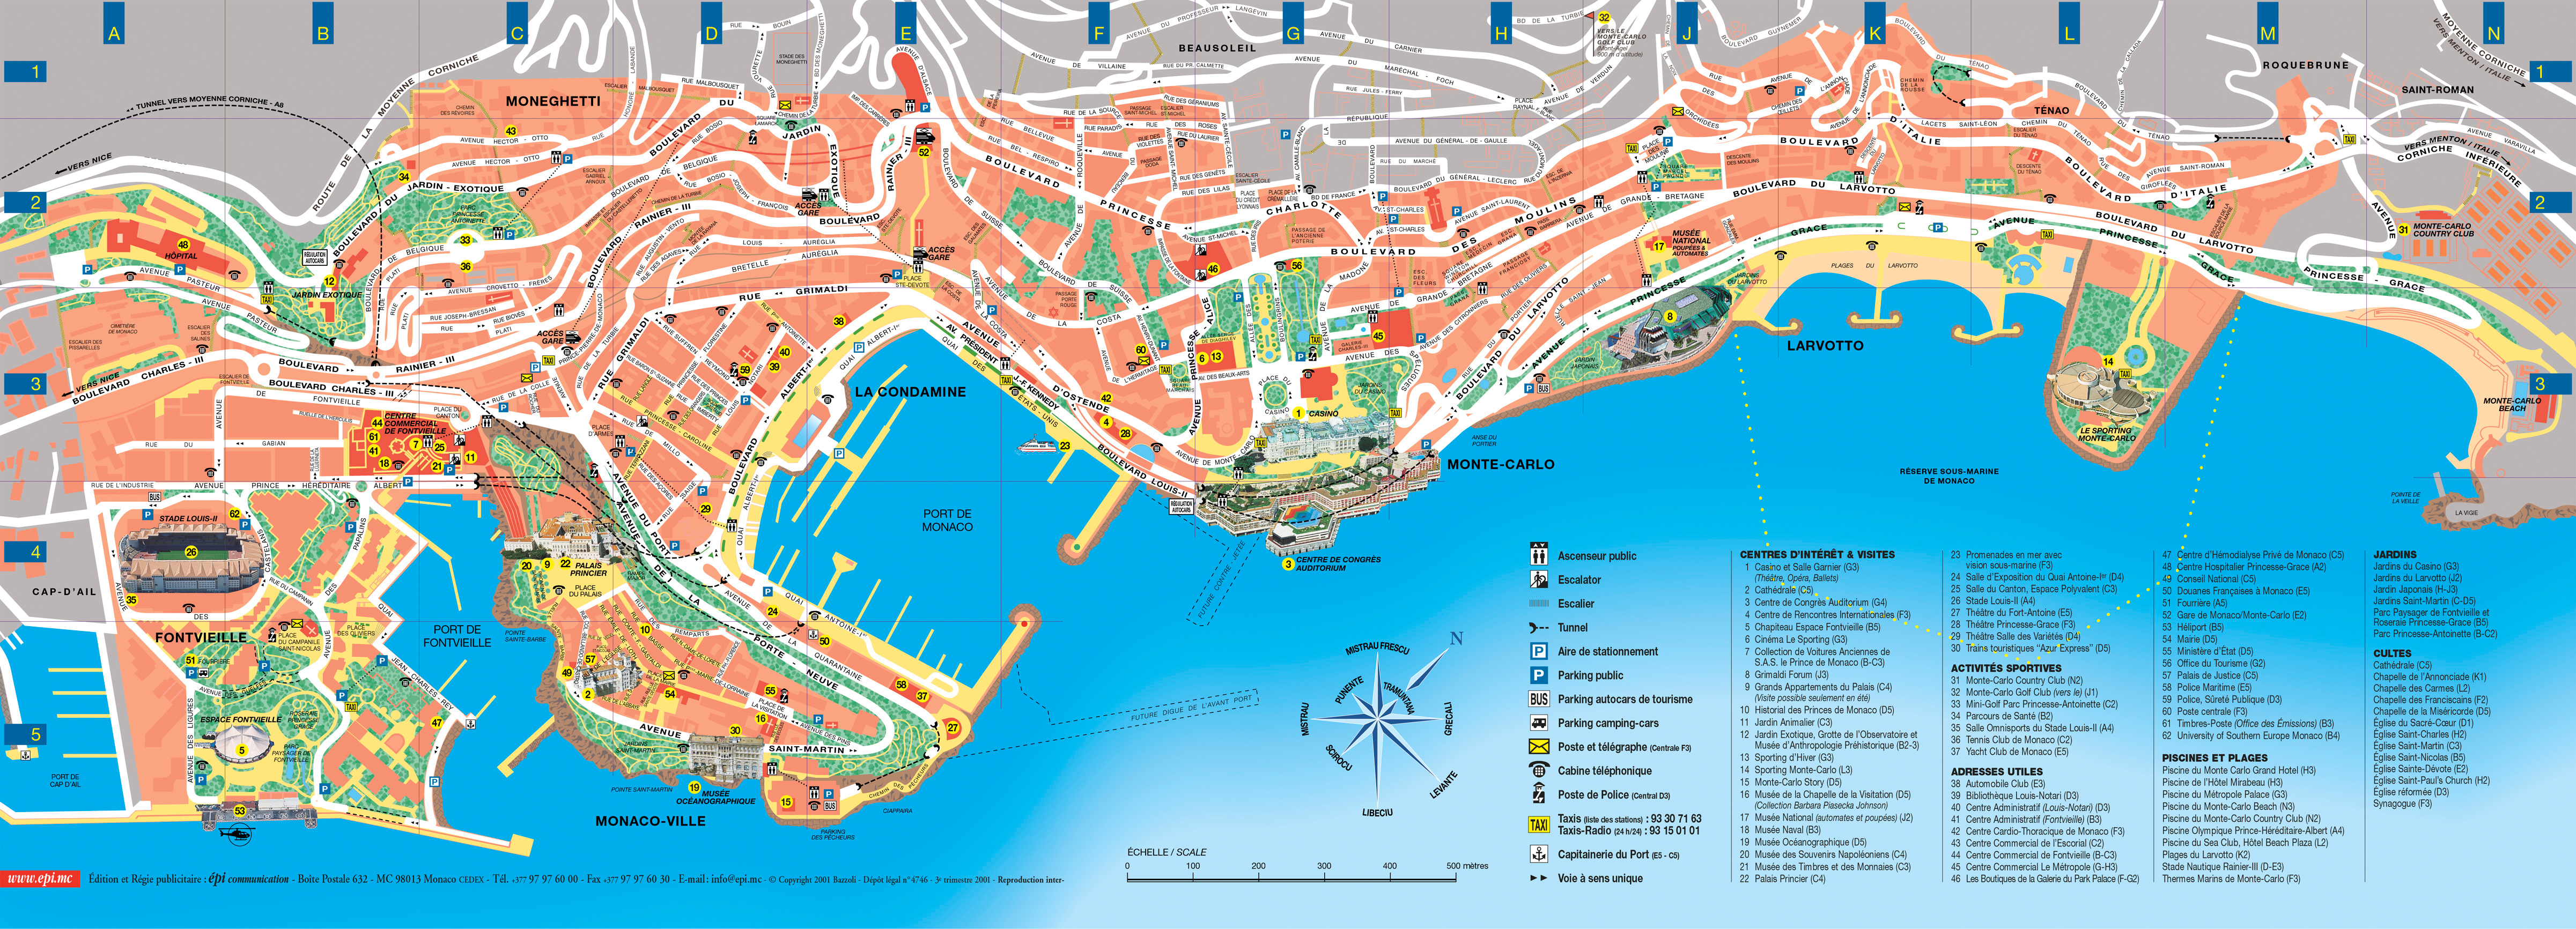 Monaco Satelliten-karte